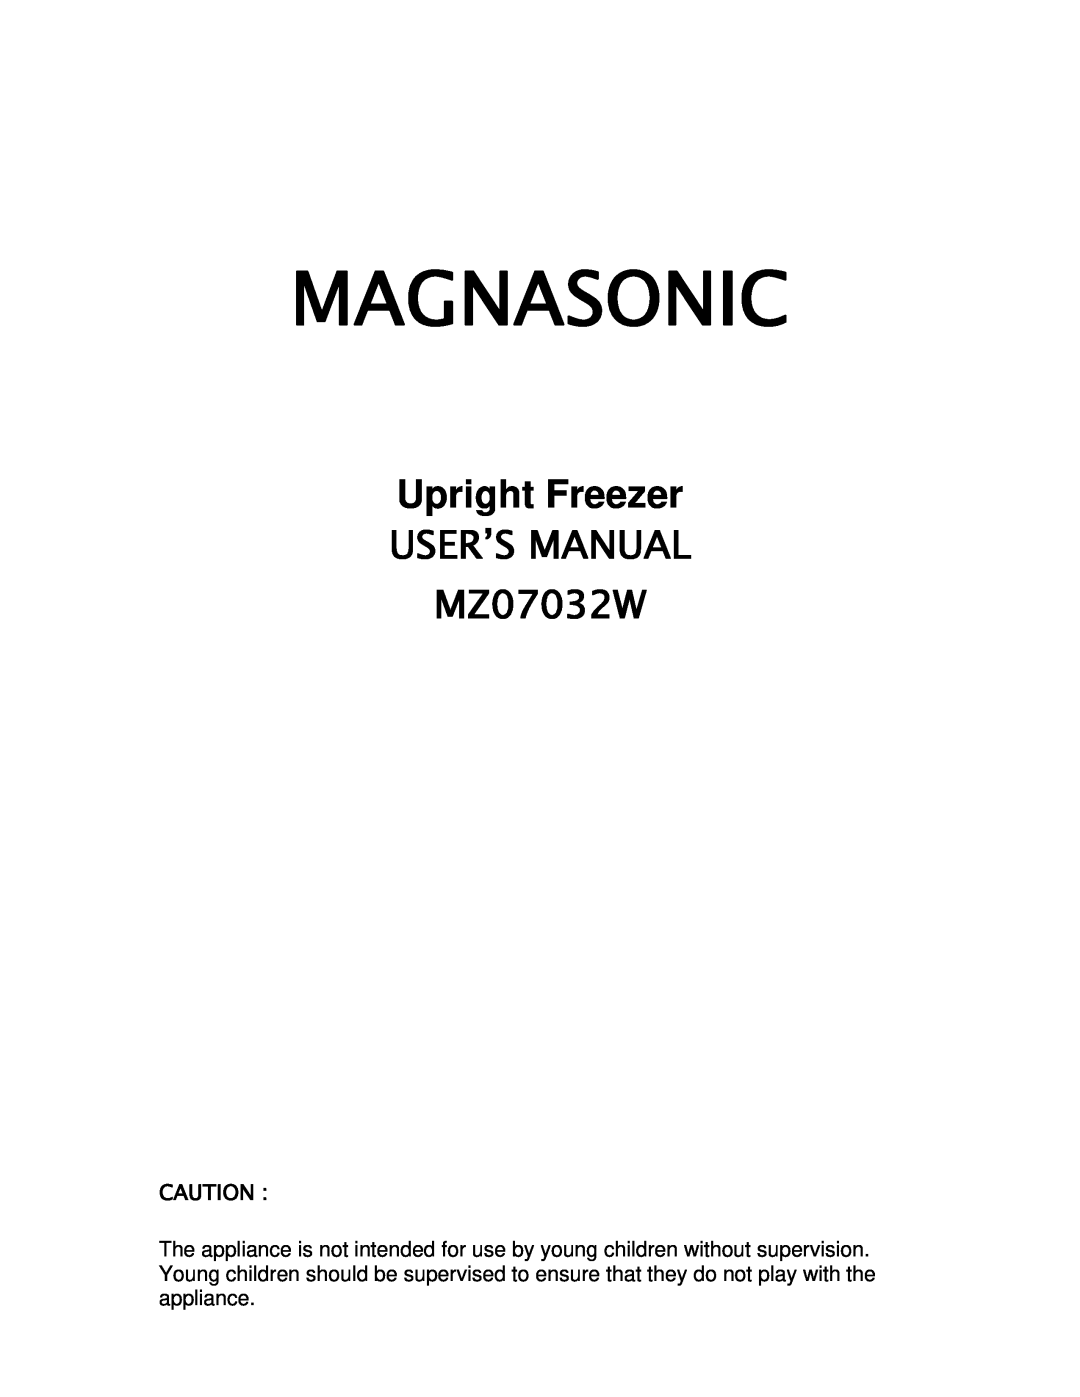 Magnasonic instruction manual Magnasonic, Upright Freezer, USER’S MANUAL MZ07032W 